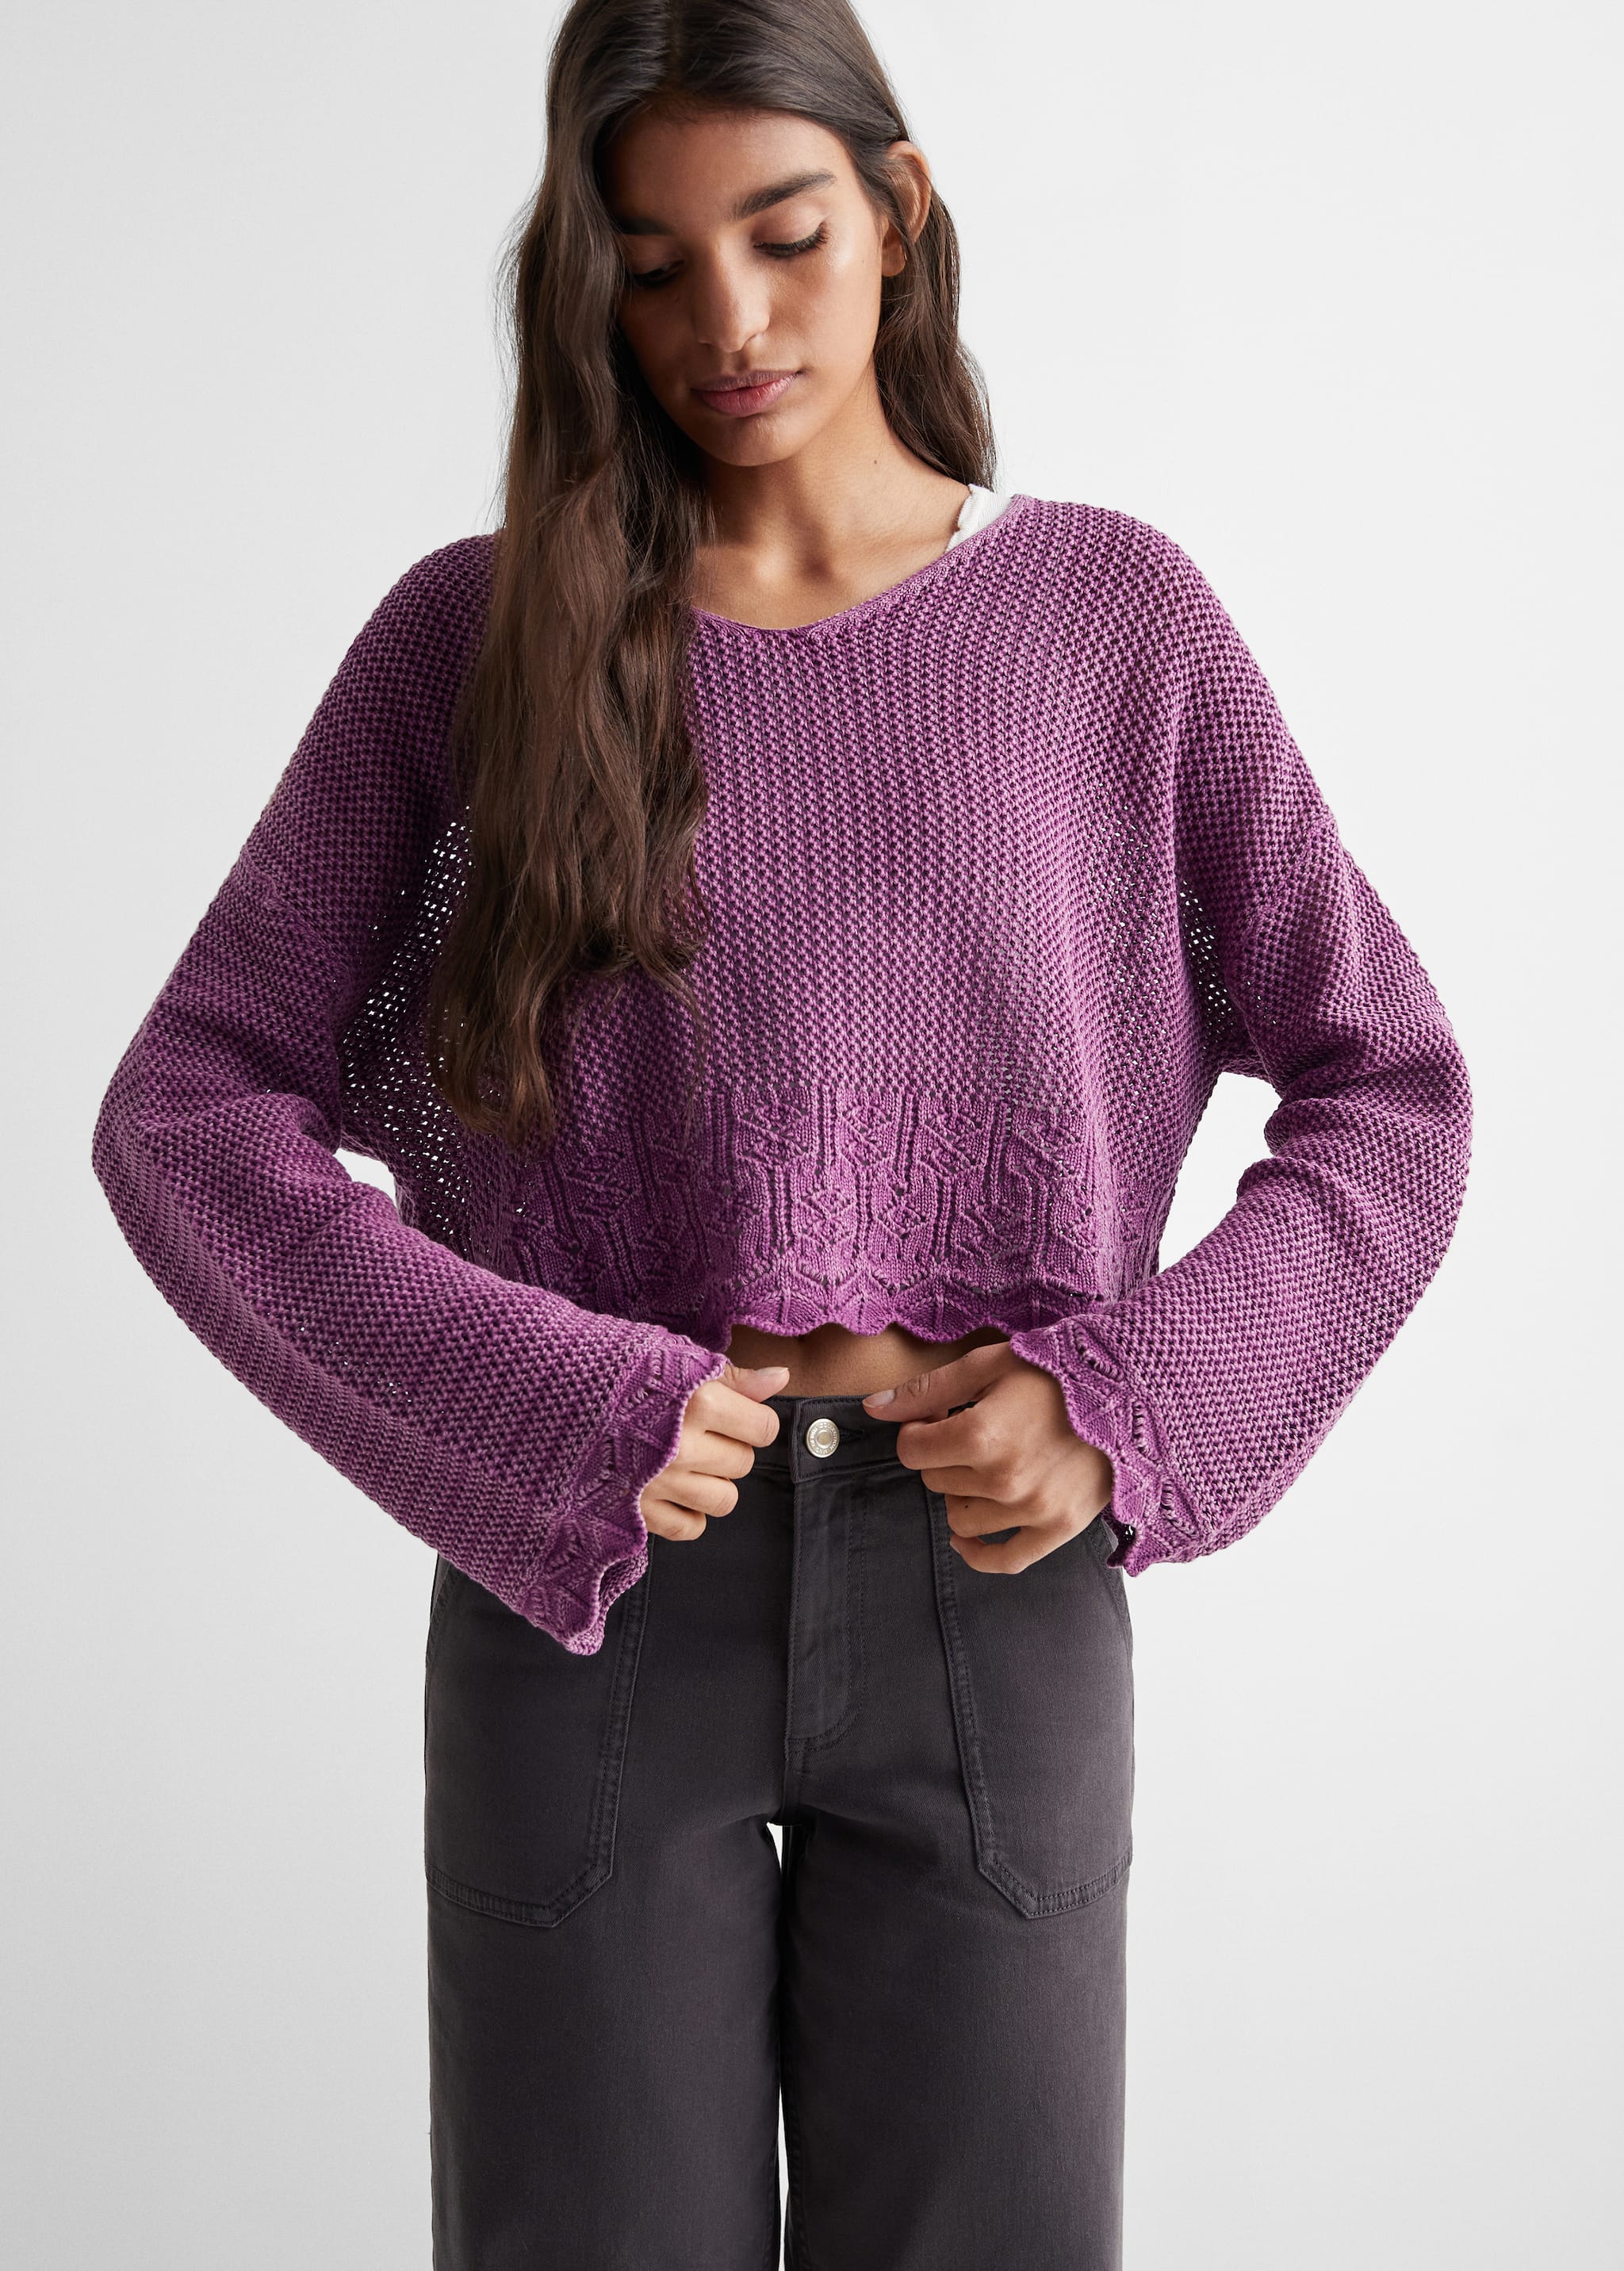 V-neck openwork knitted sweater - Medium plane